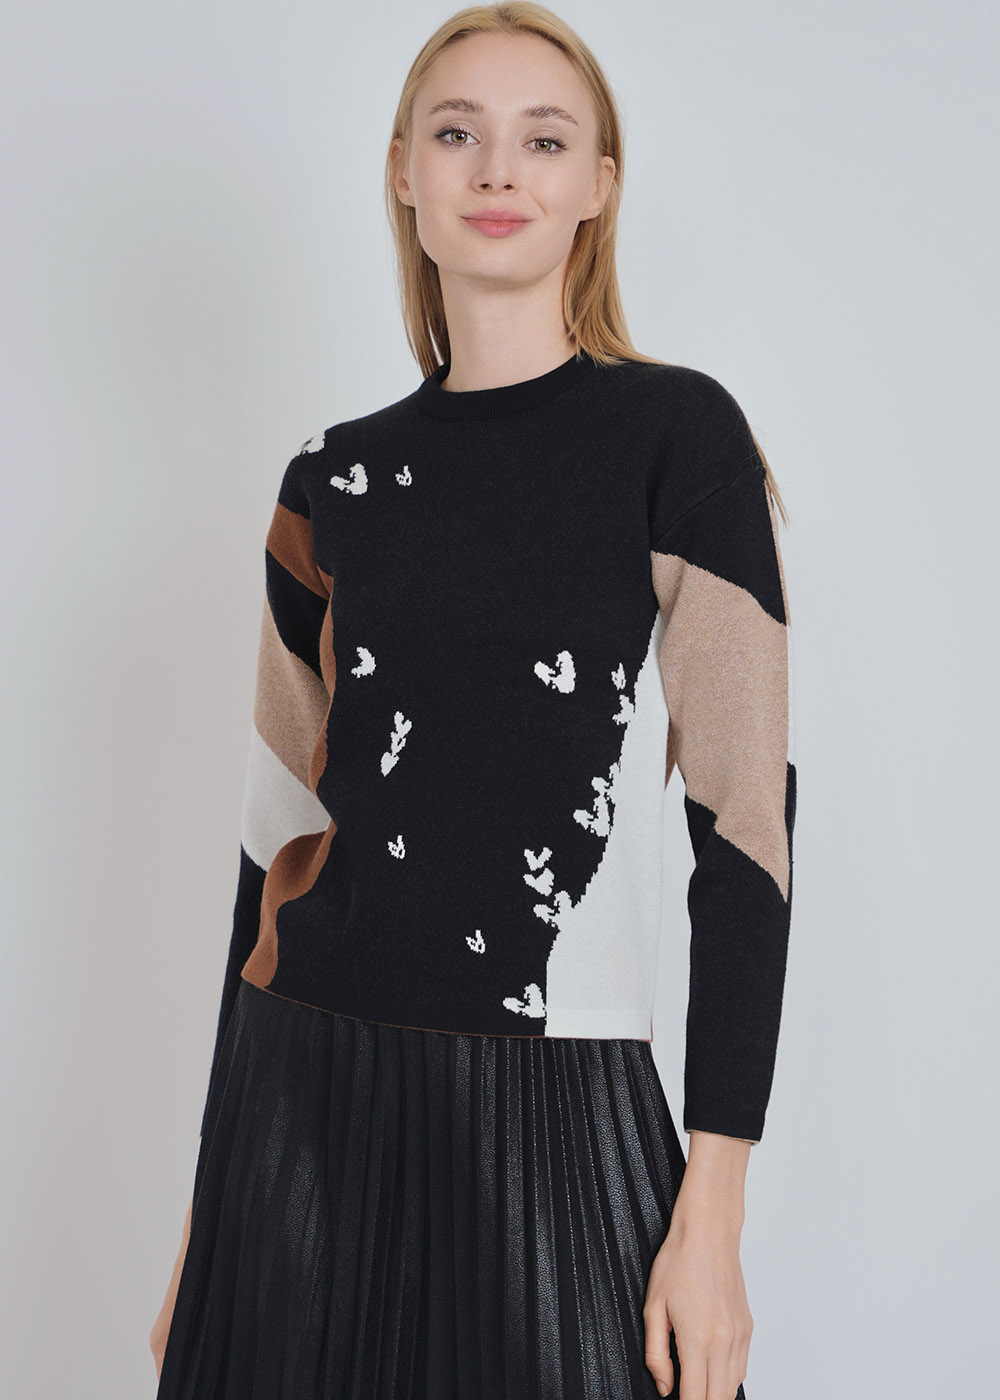 Versatile Black Color Block Sweater